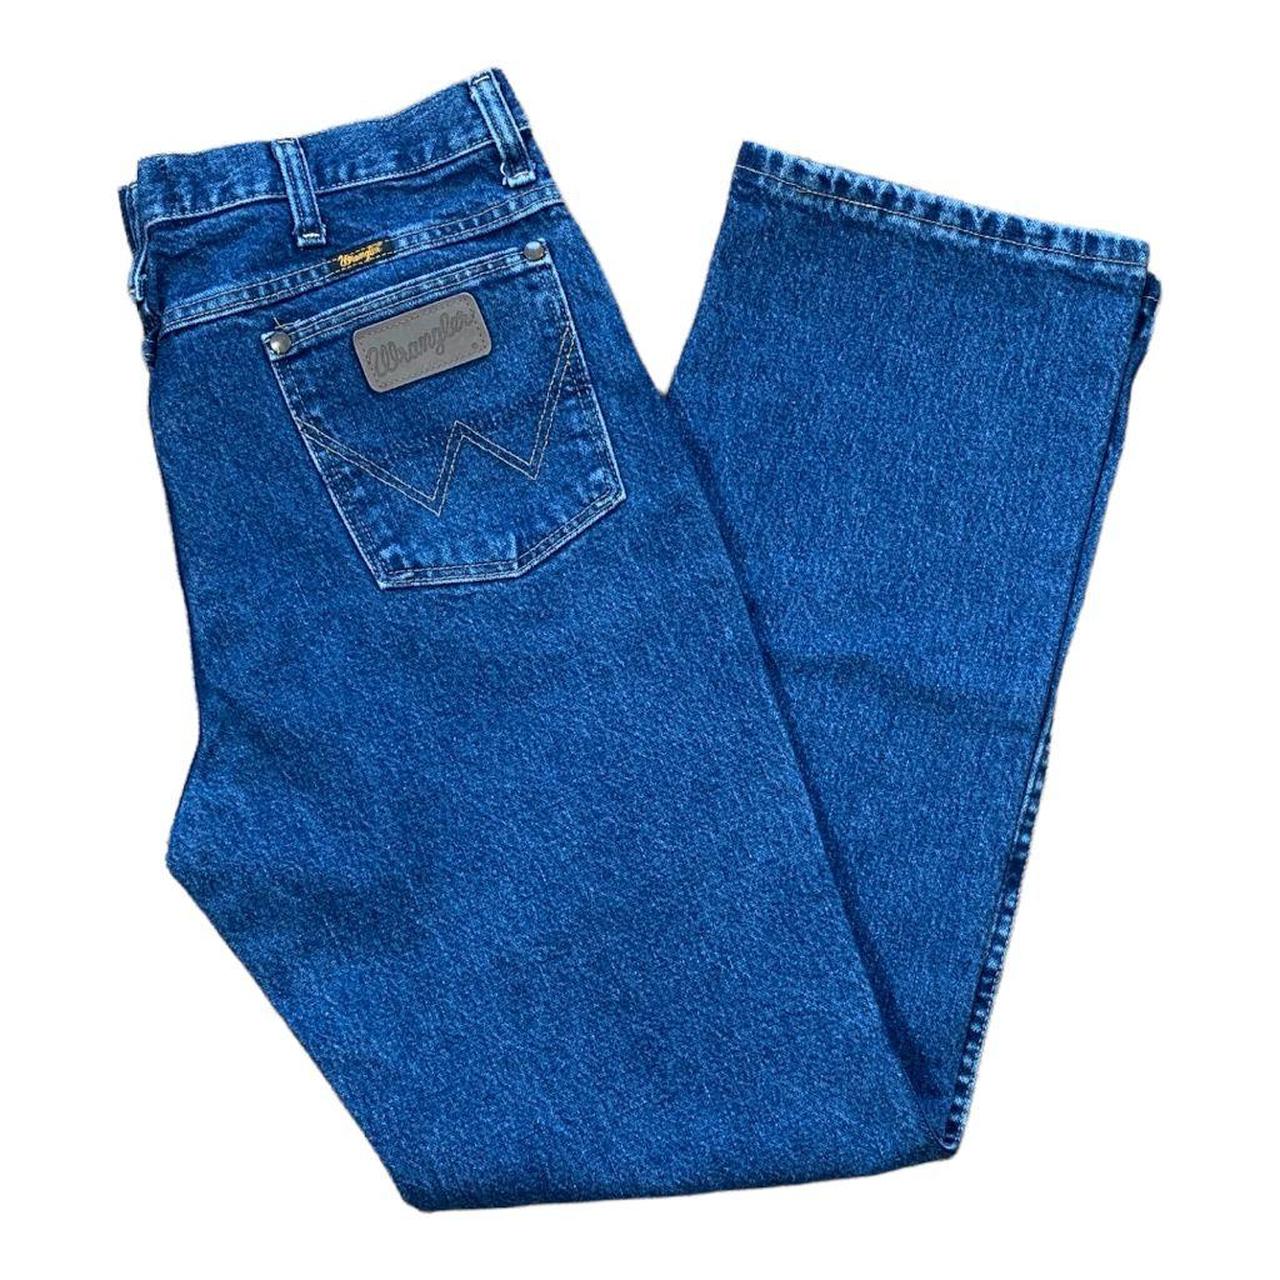 Product Image 1 - 90s Wrangler Jeans Vintage Size